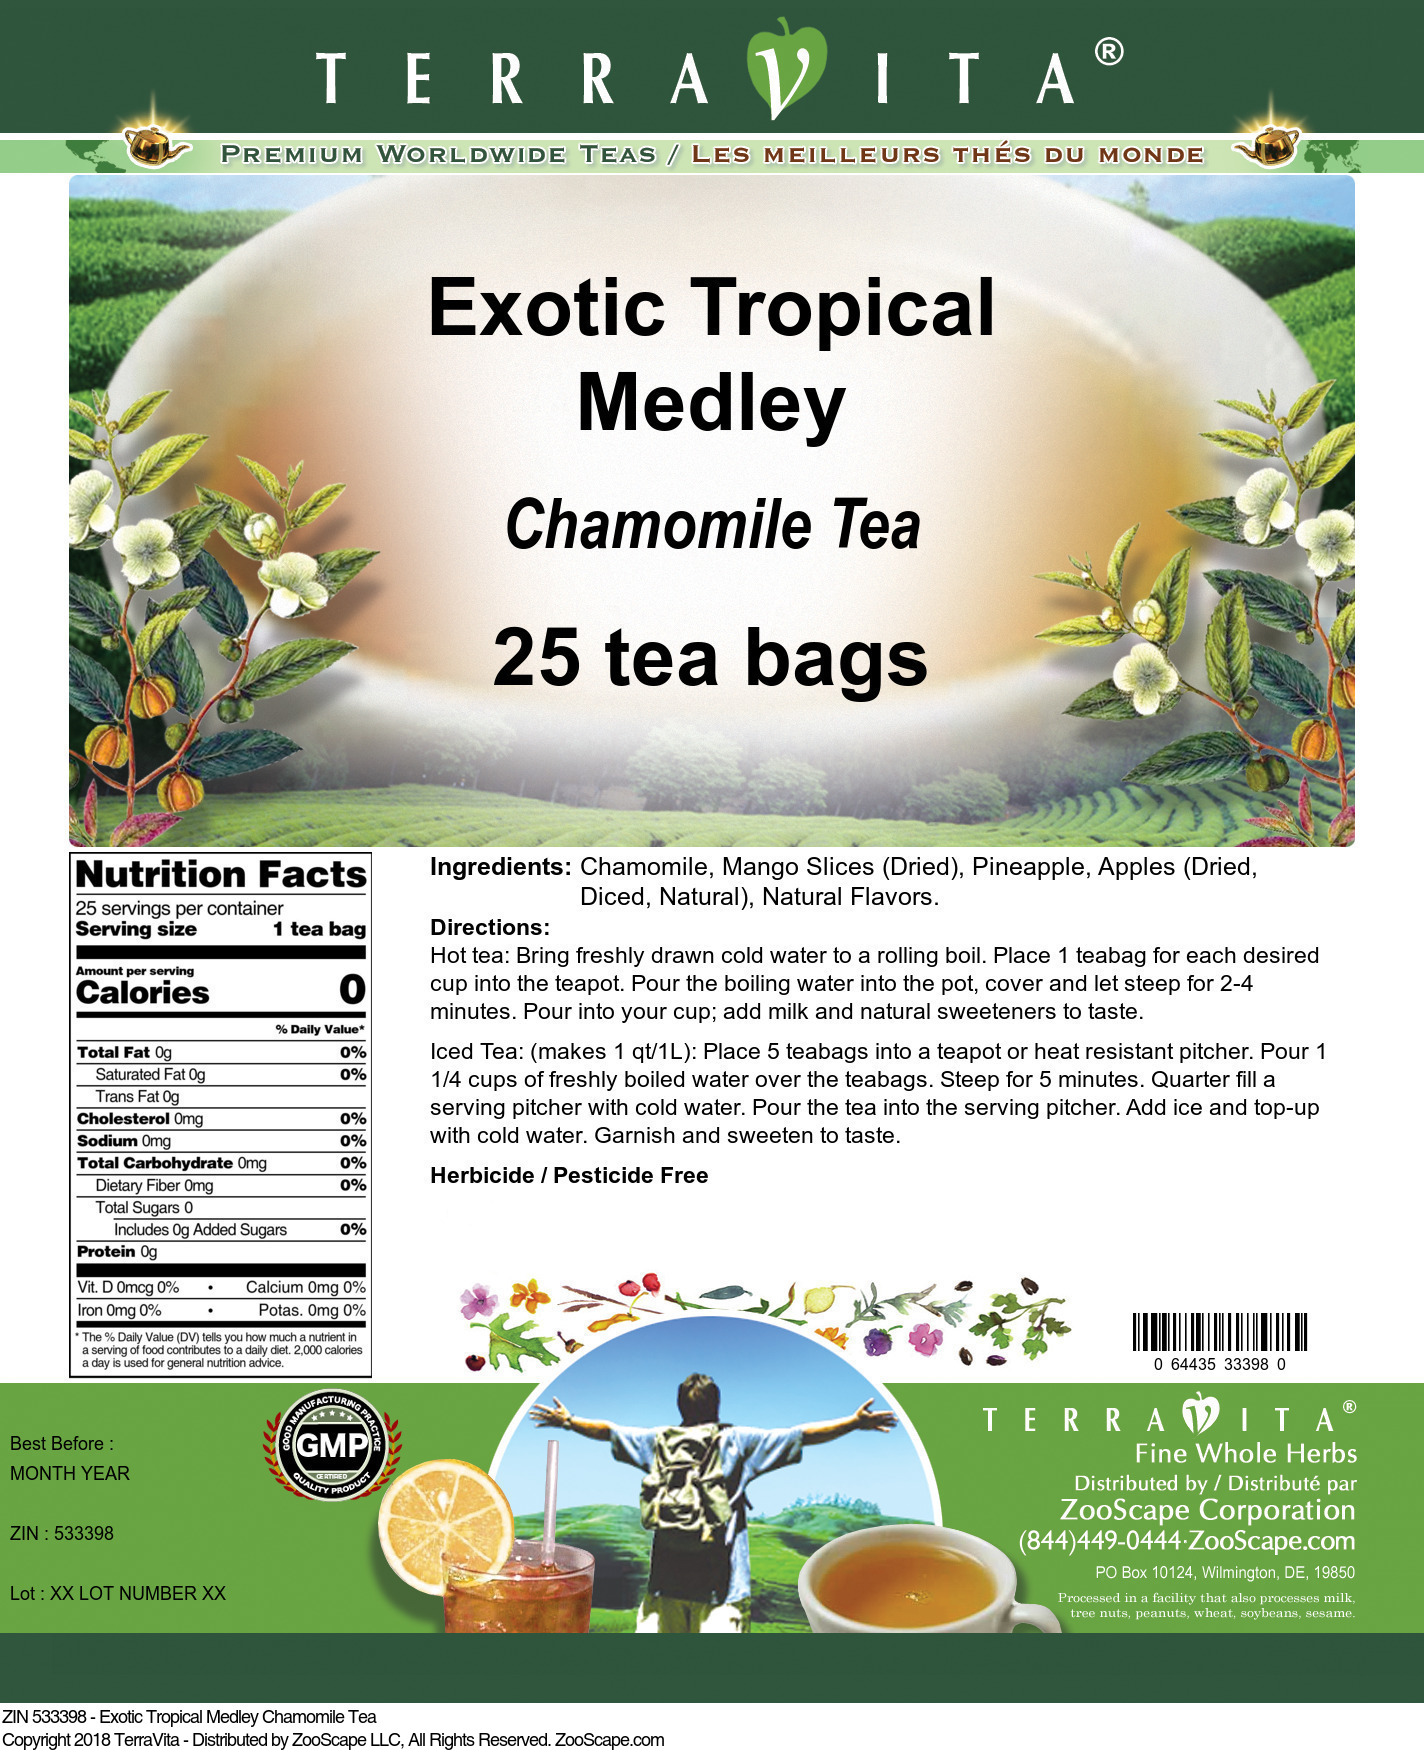 Exotic Tropical Medley Chamomile Tea - Label